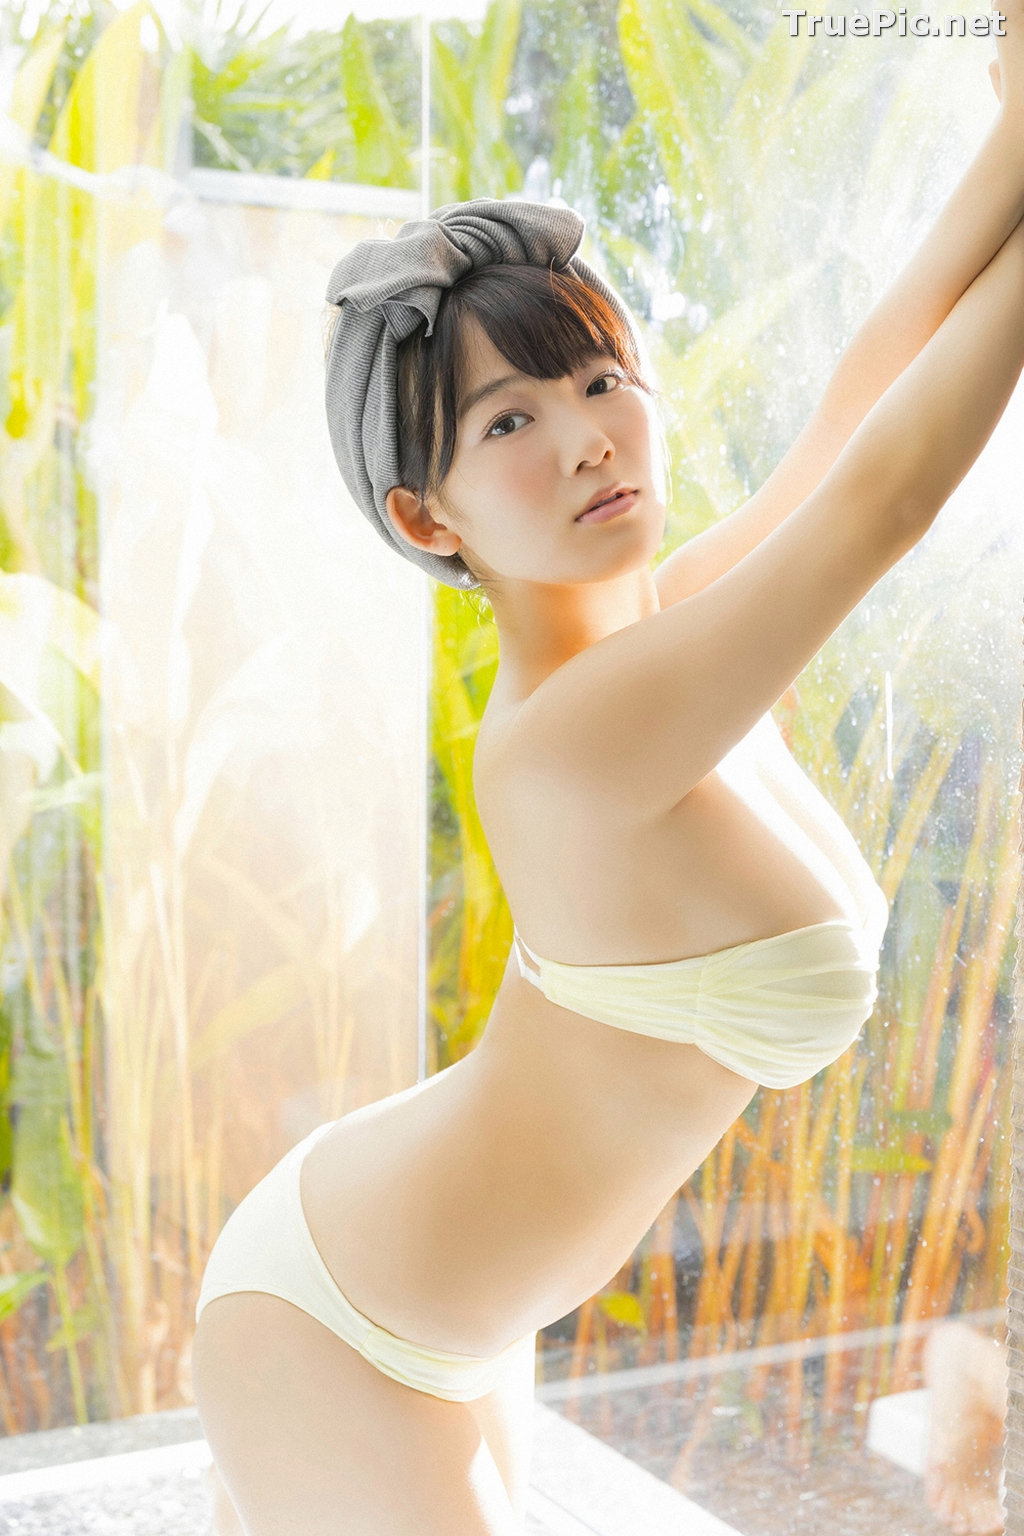 Image [YS-Web] Vol.813 - Japanese Gravure Idol - Jun Amaki (天木じゅん) - TruePic.net - Picture-29